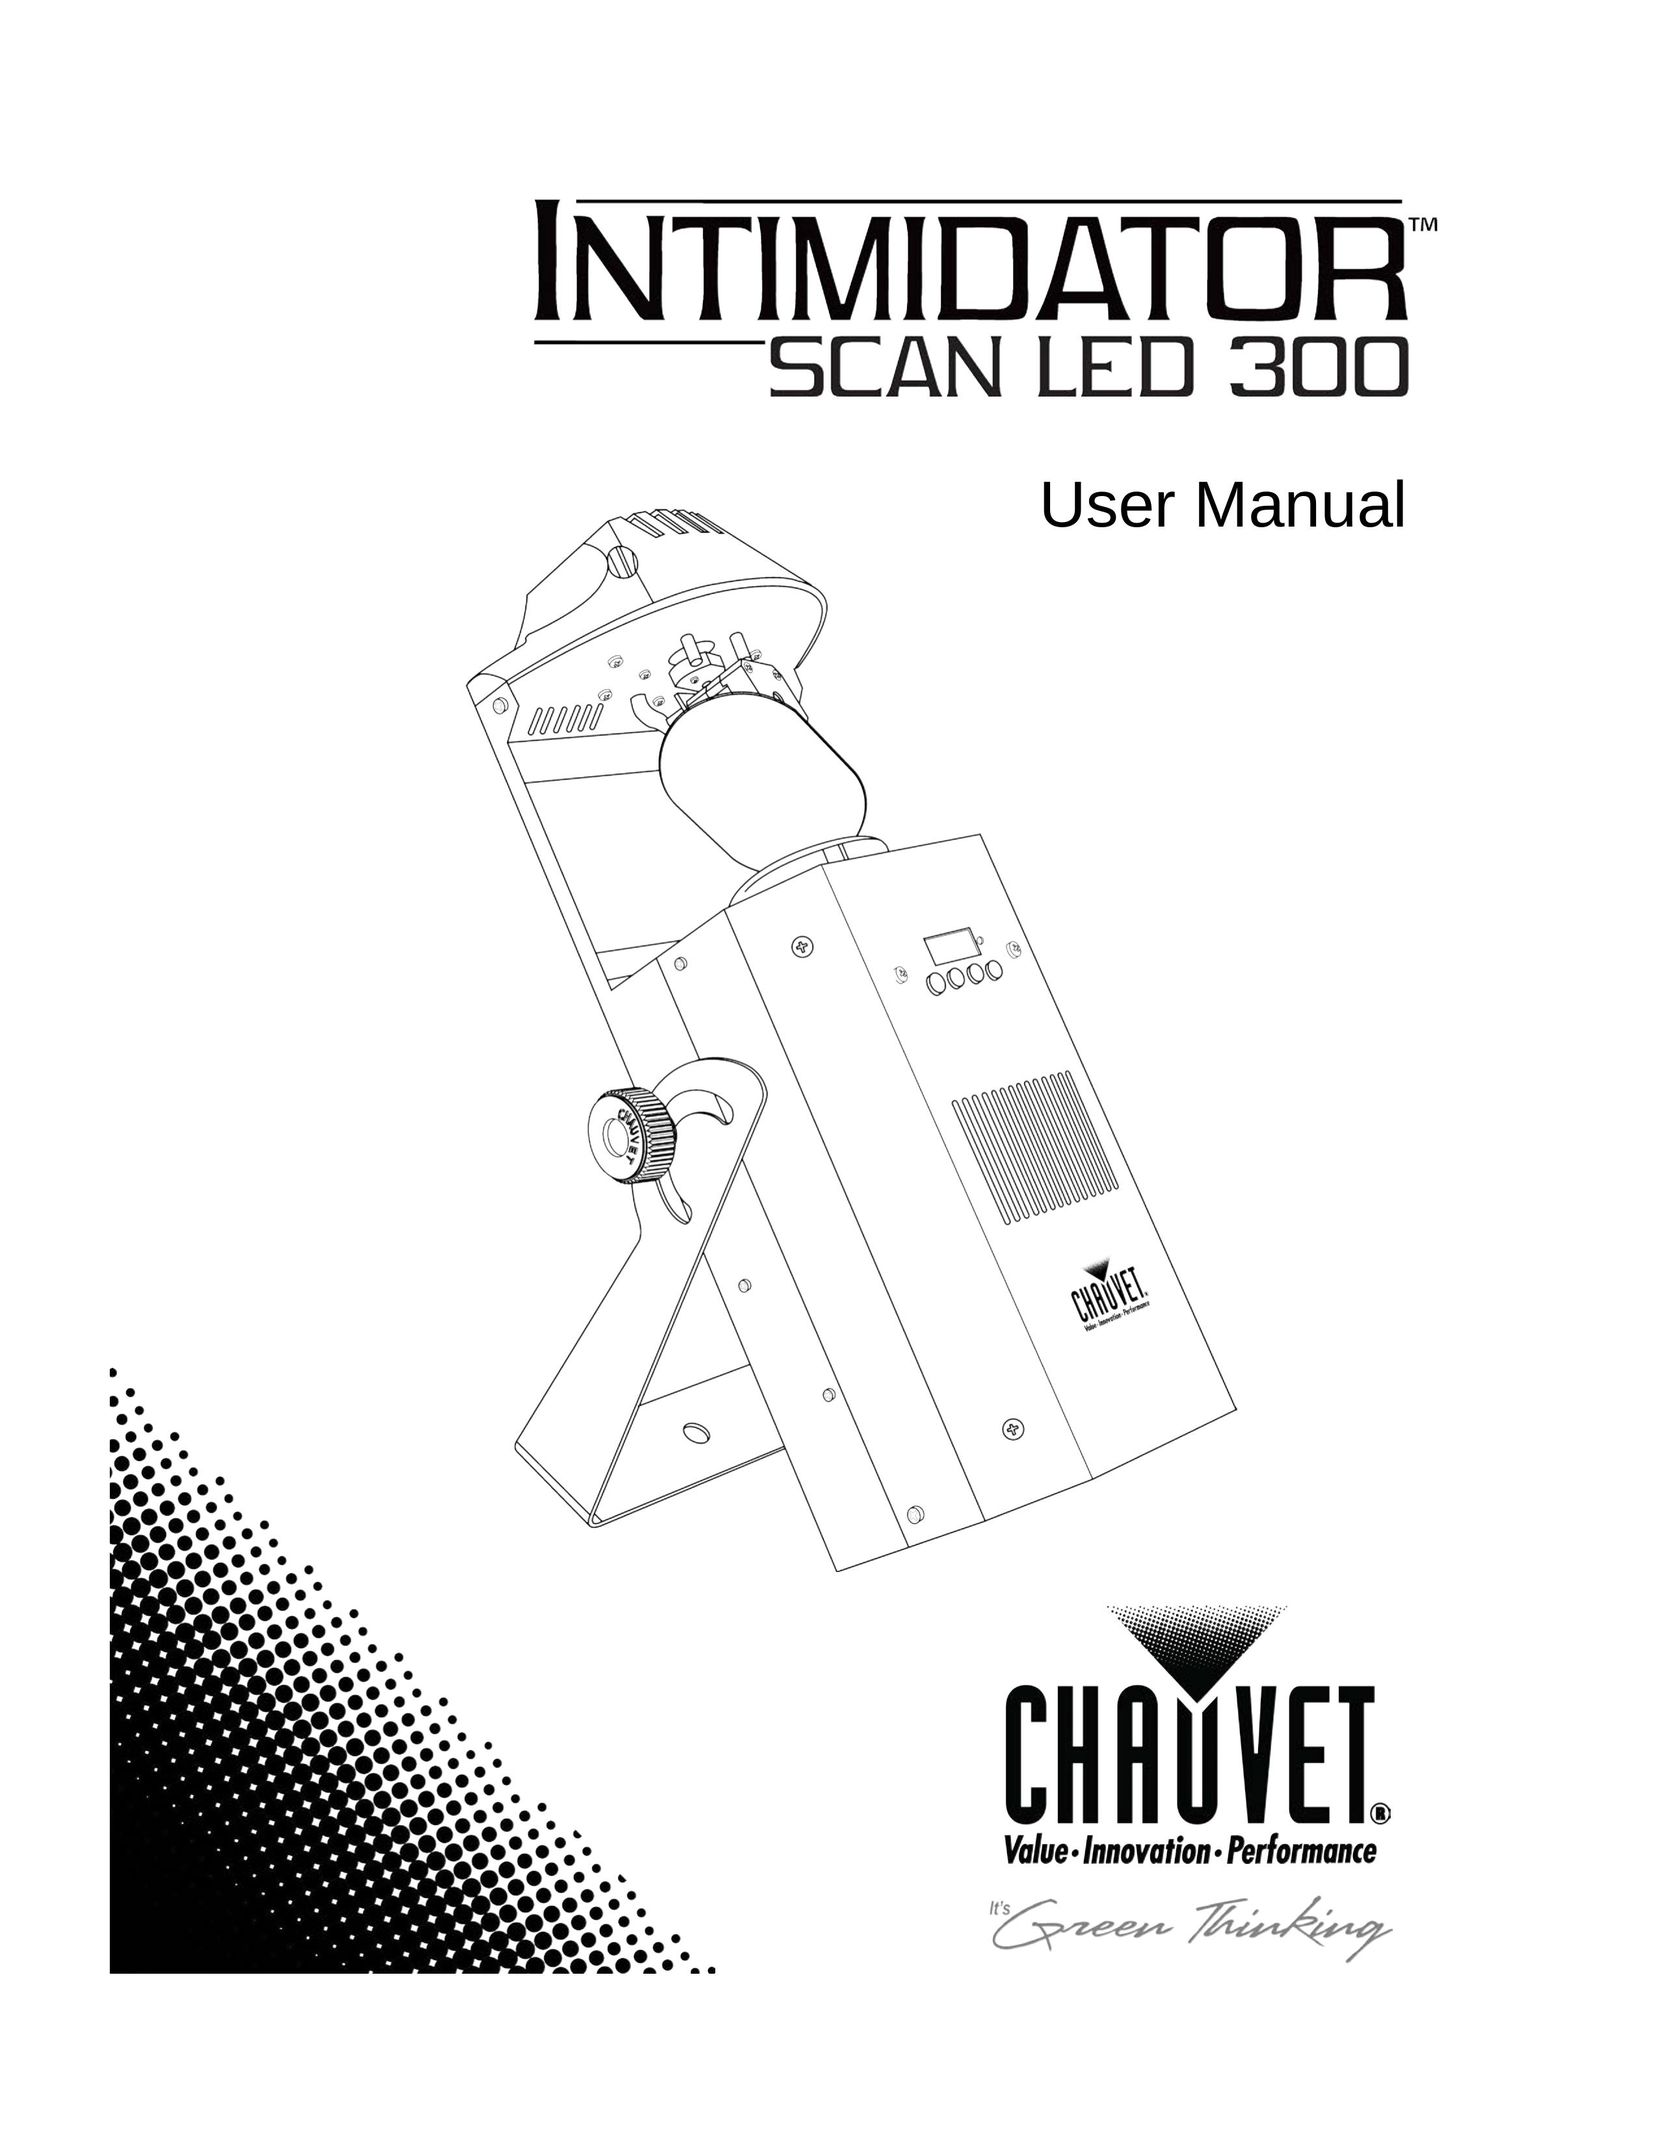 Chauvet INTIMIDATORSCANLED300 Work Light User Manual